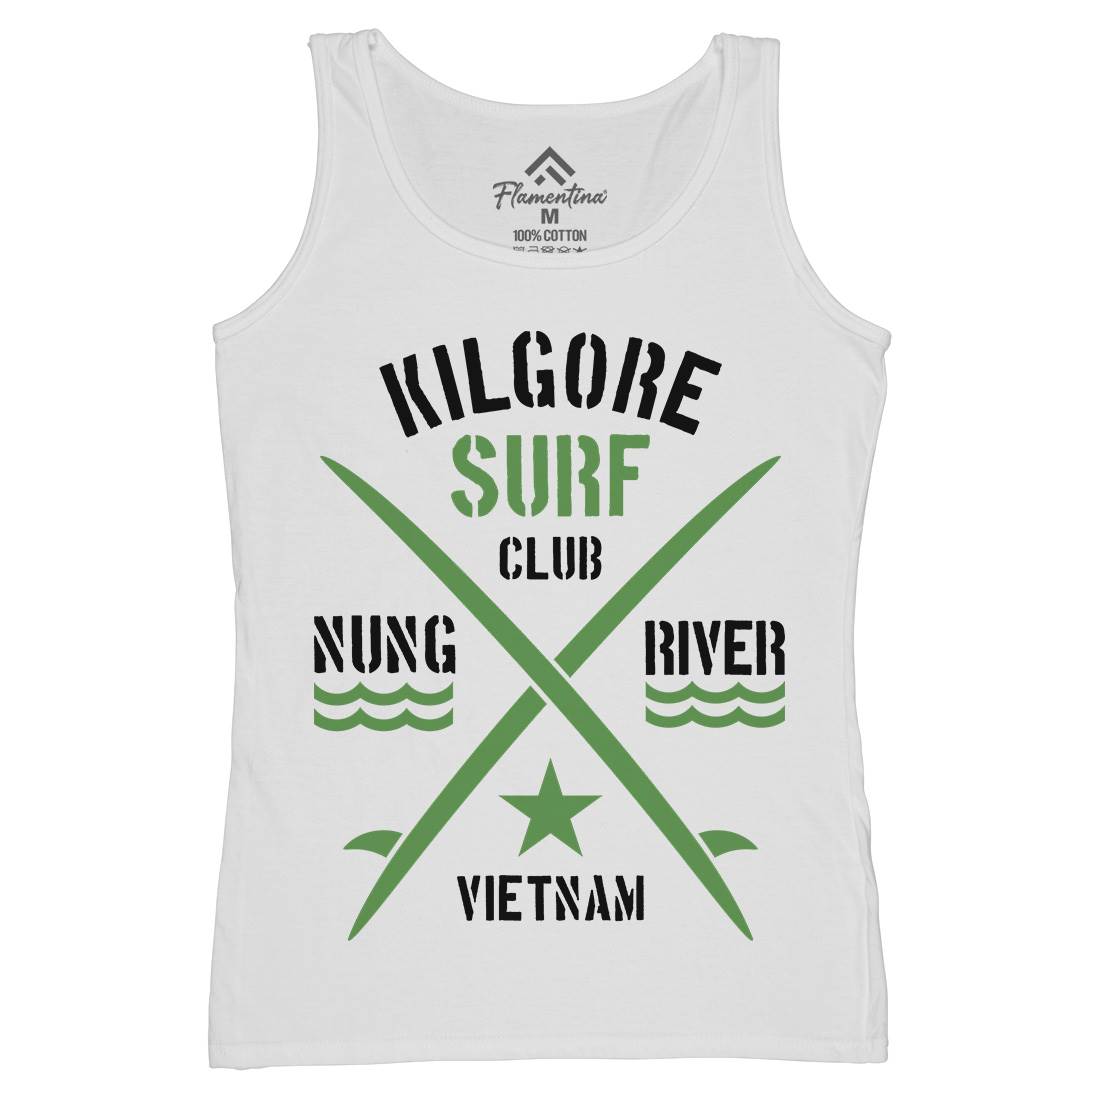 Kilgore Club Womens Organic Tank Top Vest Surf D234